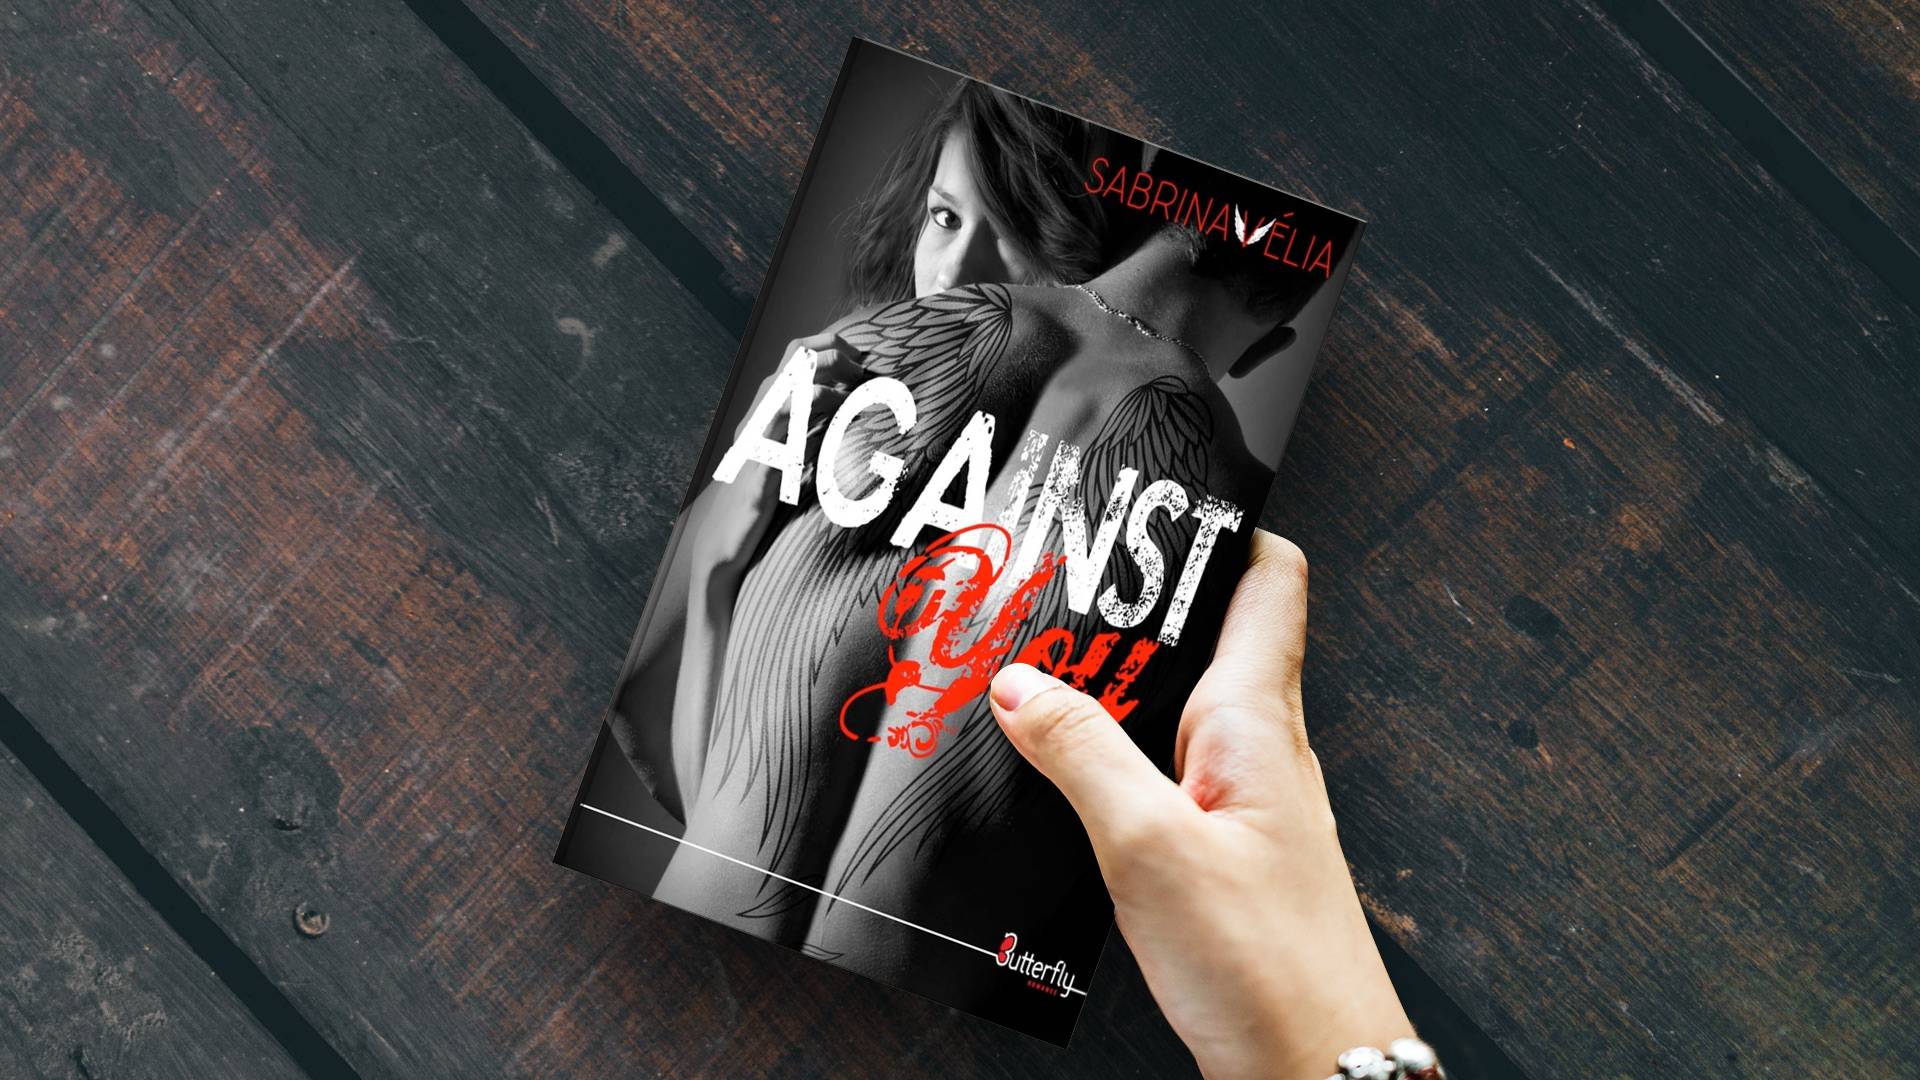 Against You – Sabrina Vélia